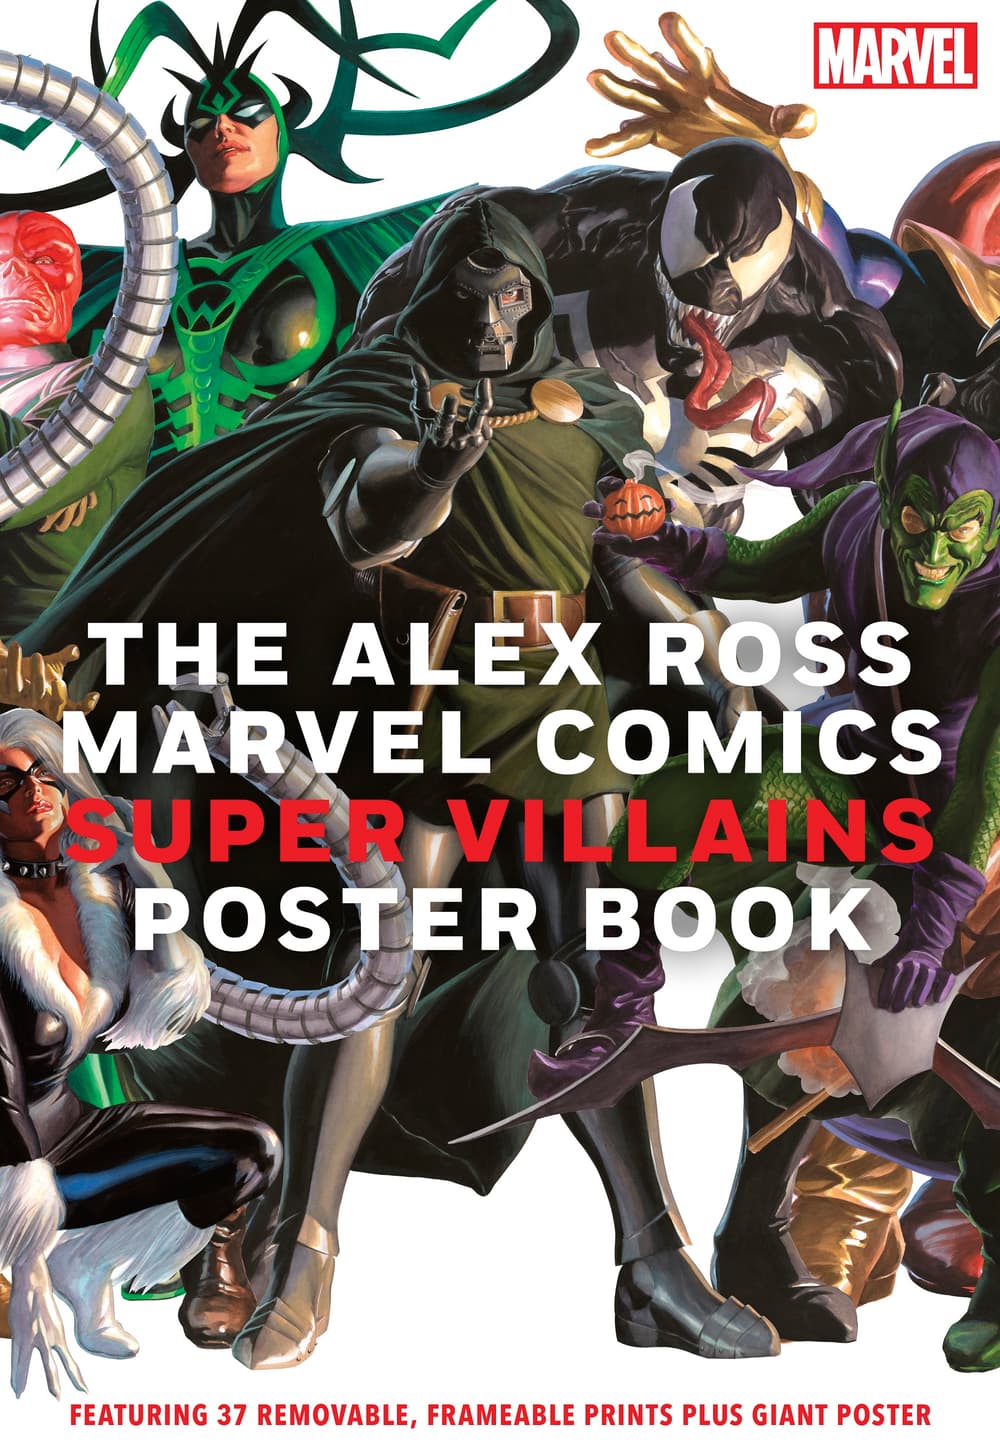 Cover to The Alex Ross Marvel Comics Super Villains Poster Book.